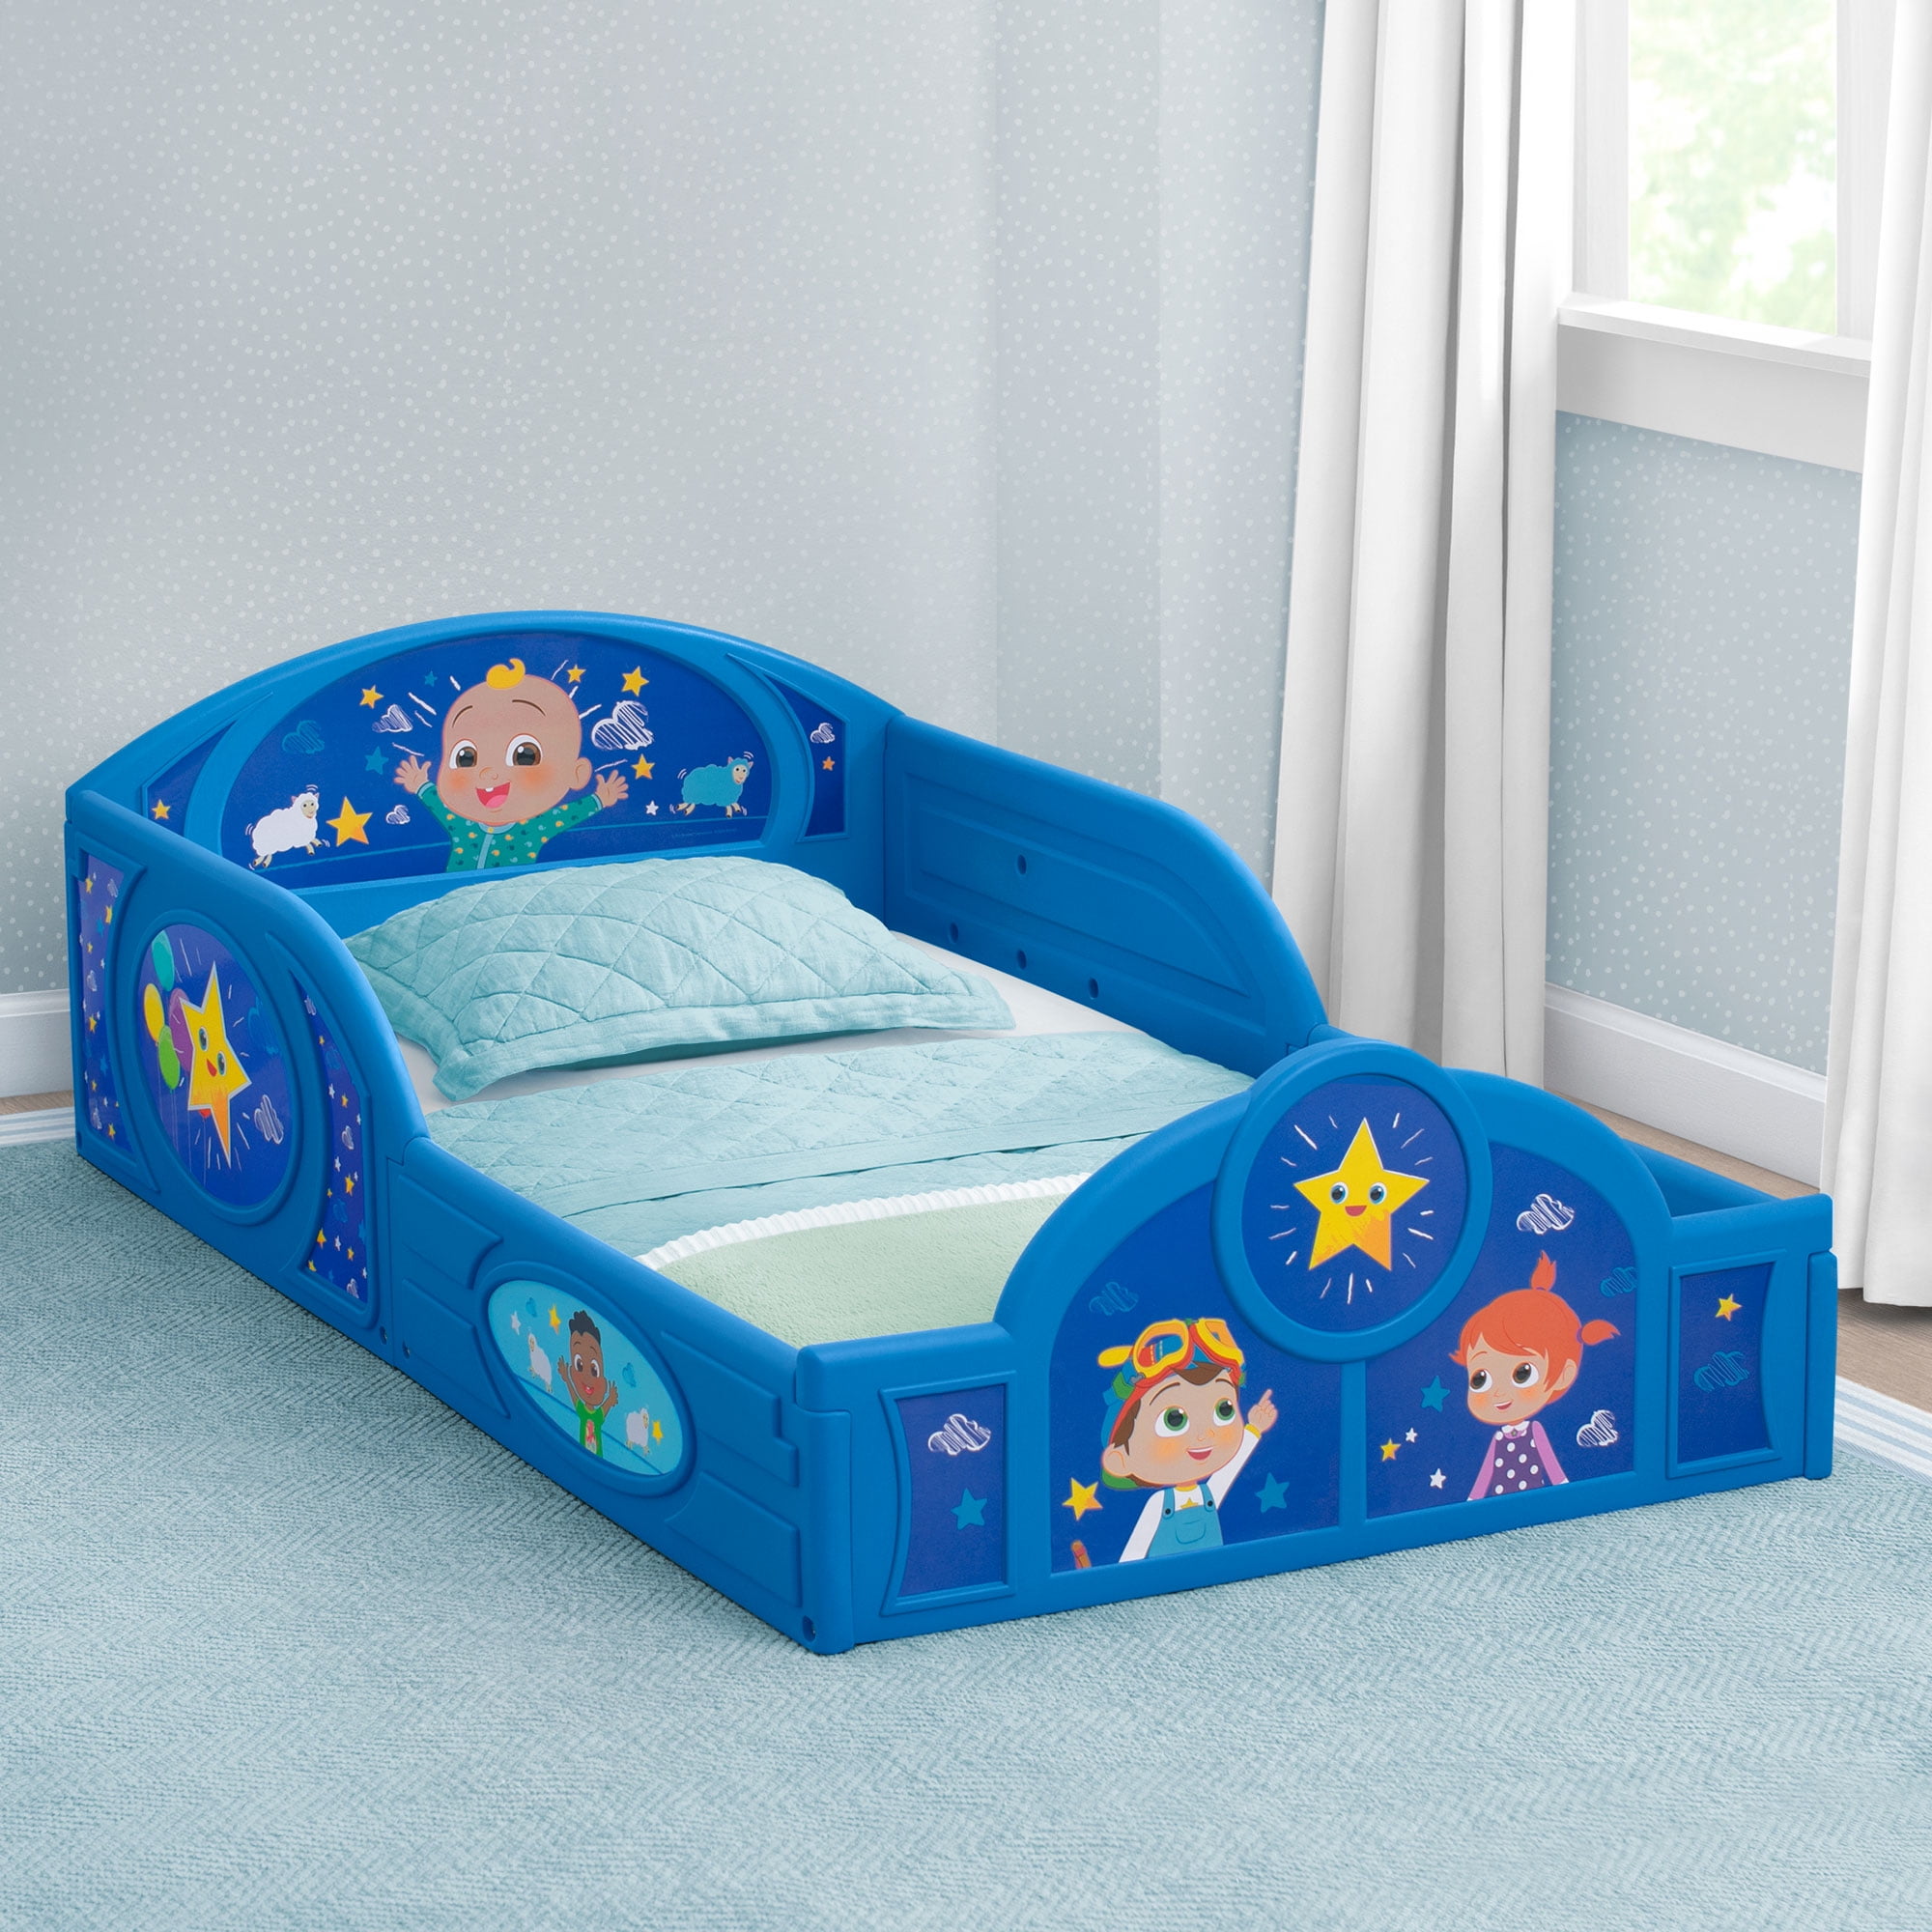 Delta Children Wood Toddler Bed Disney/Pixar Cars Delta Children's Products BB87105CR 